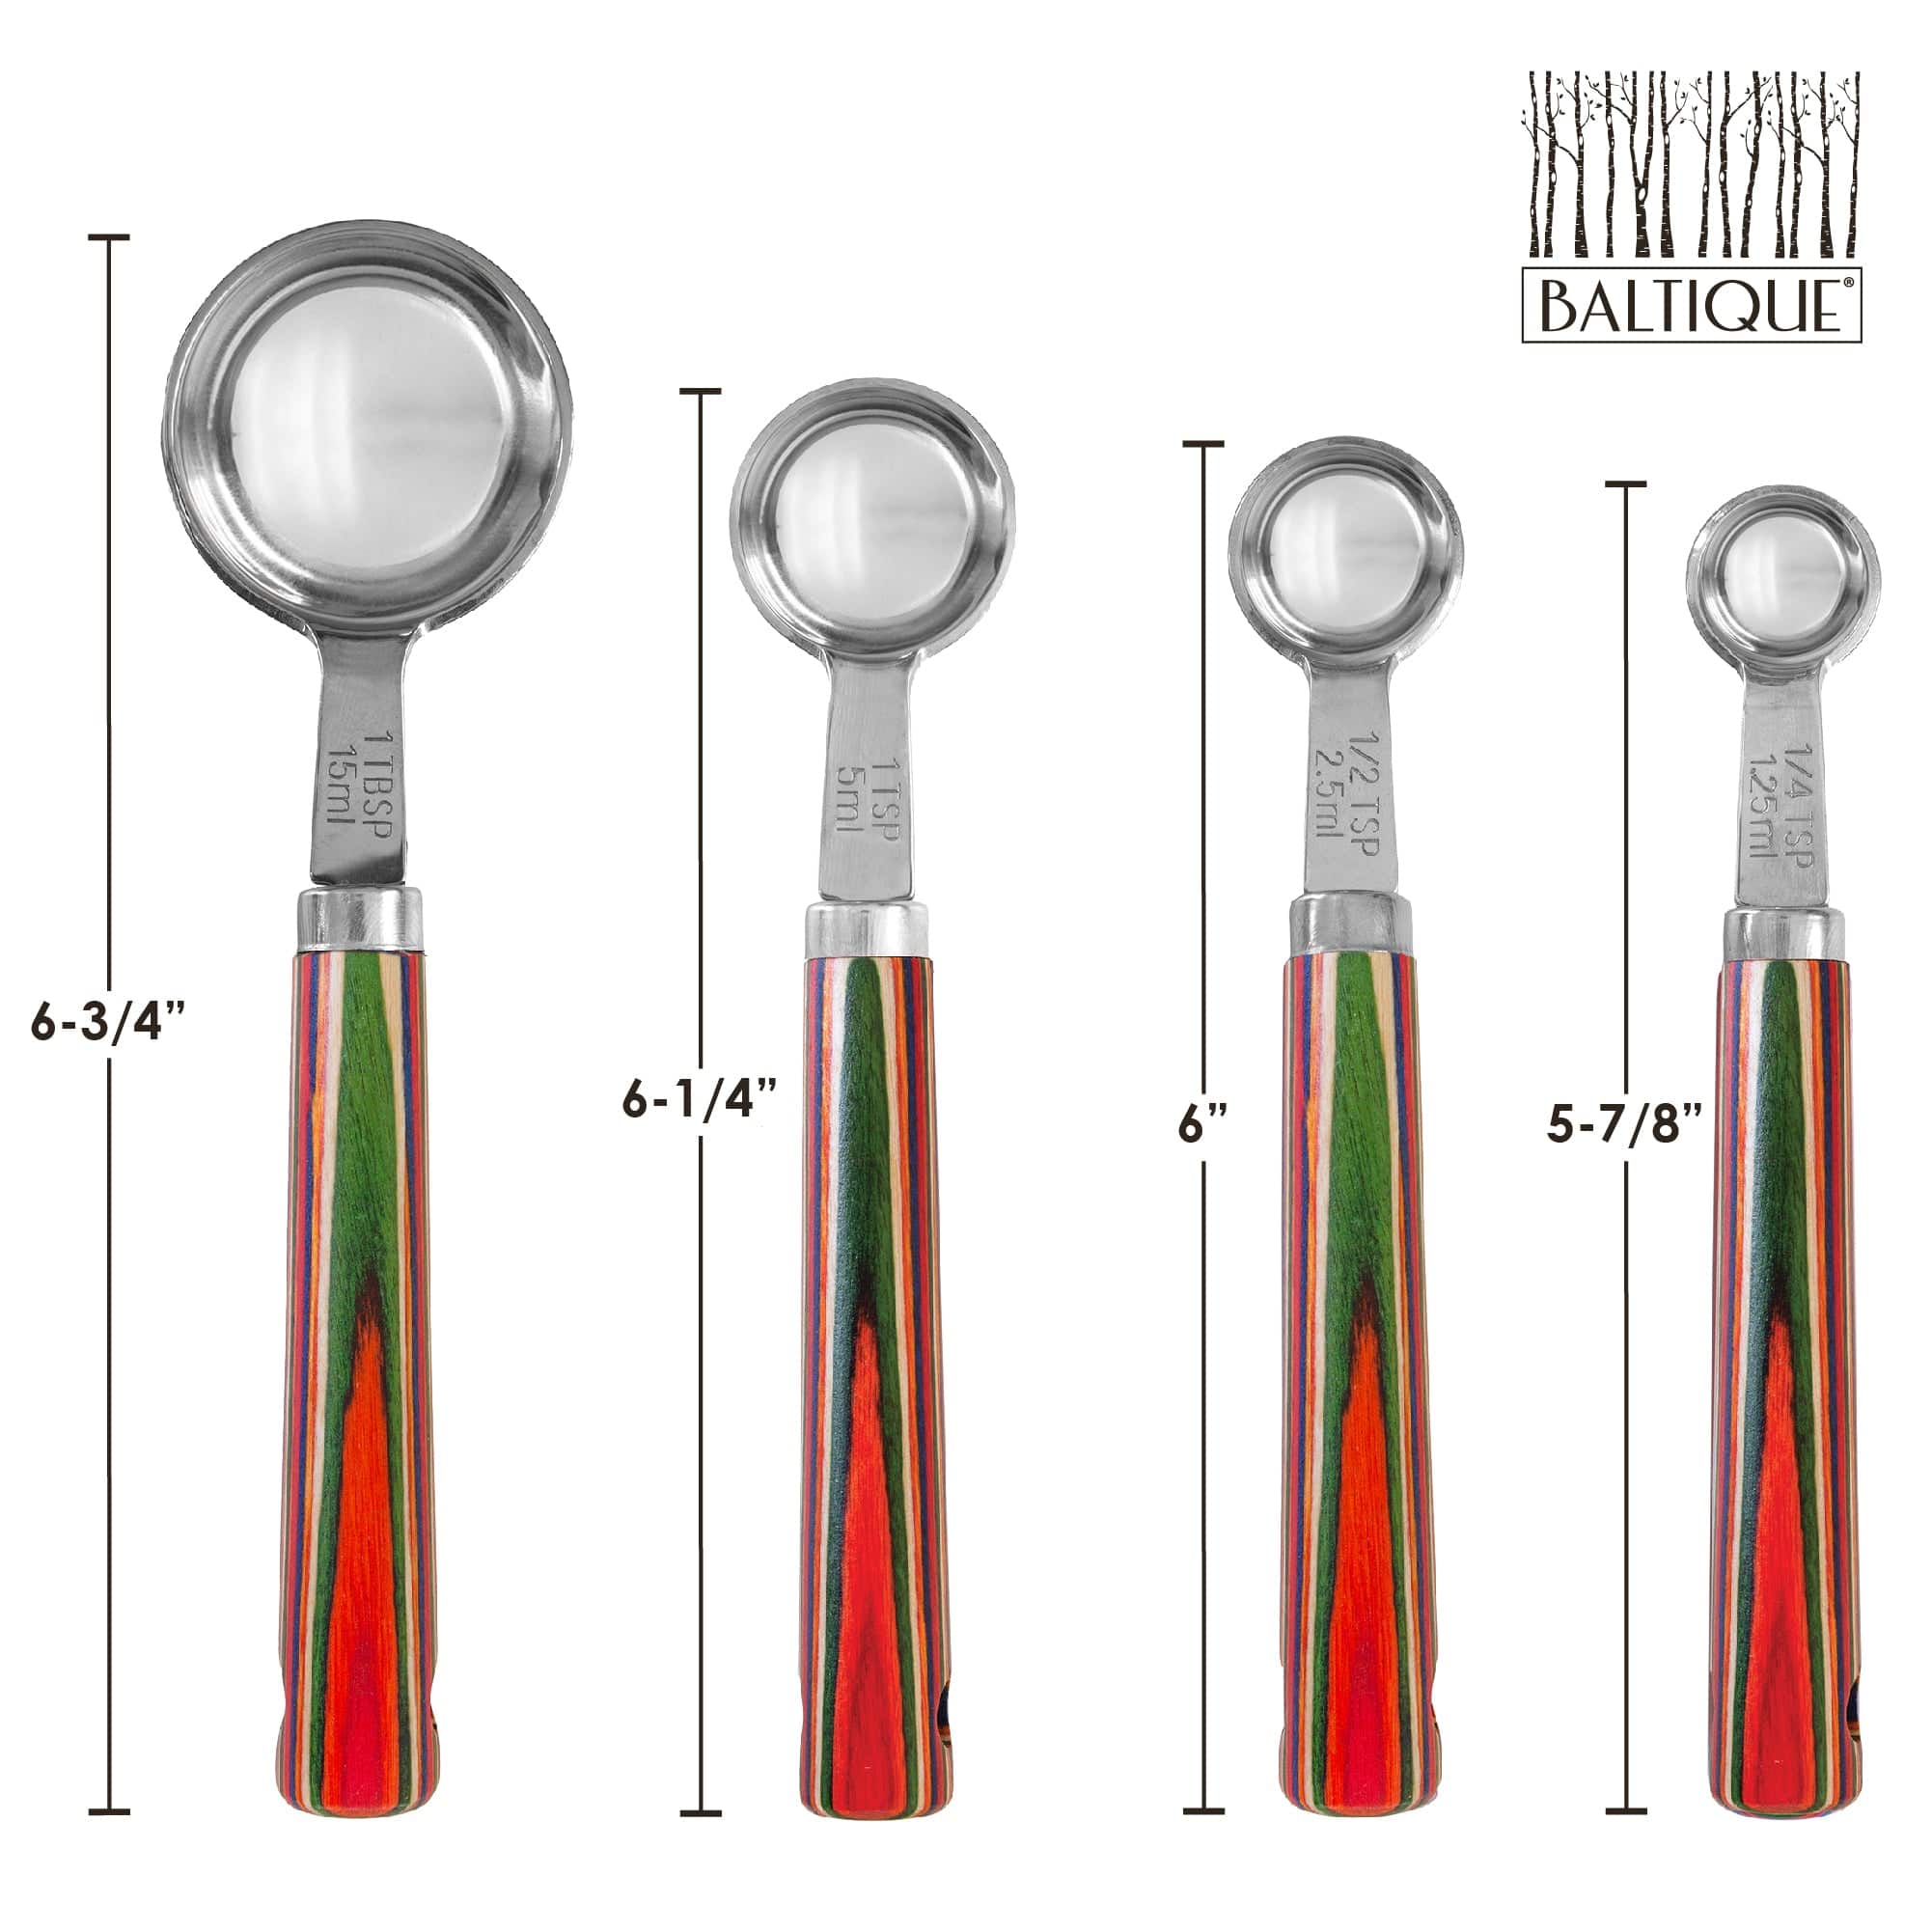 Baltique Mykonos Collection 2-in-1 Measuring Spoon